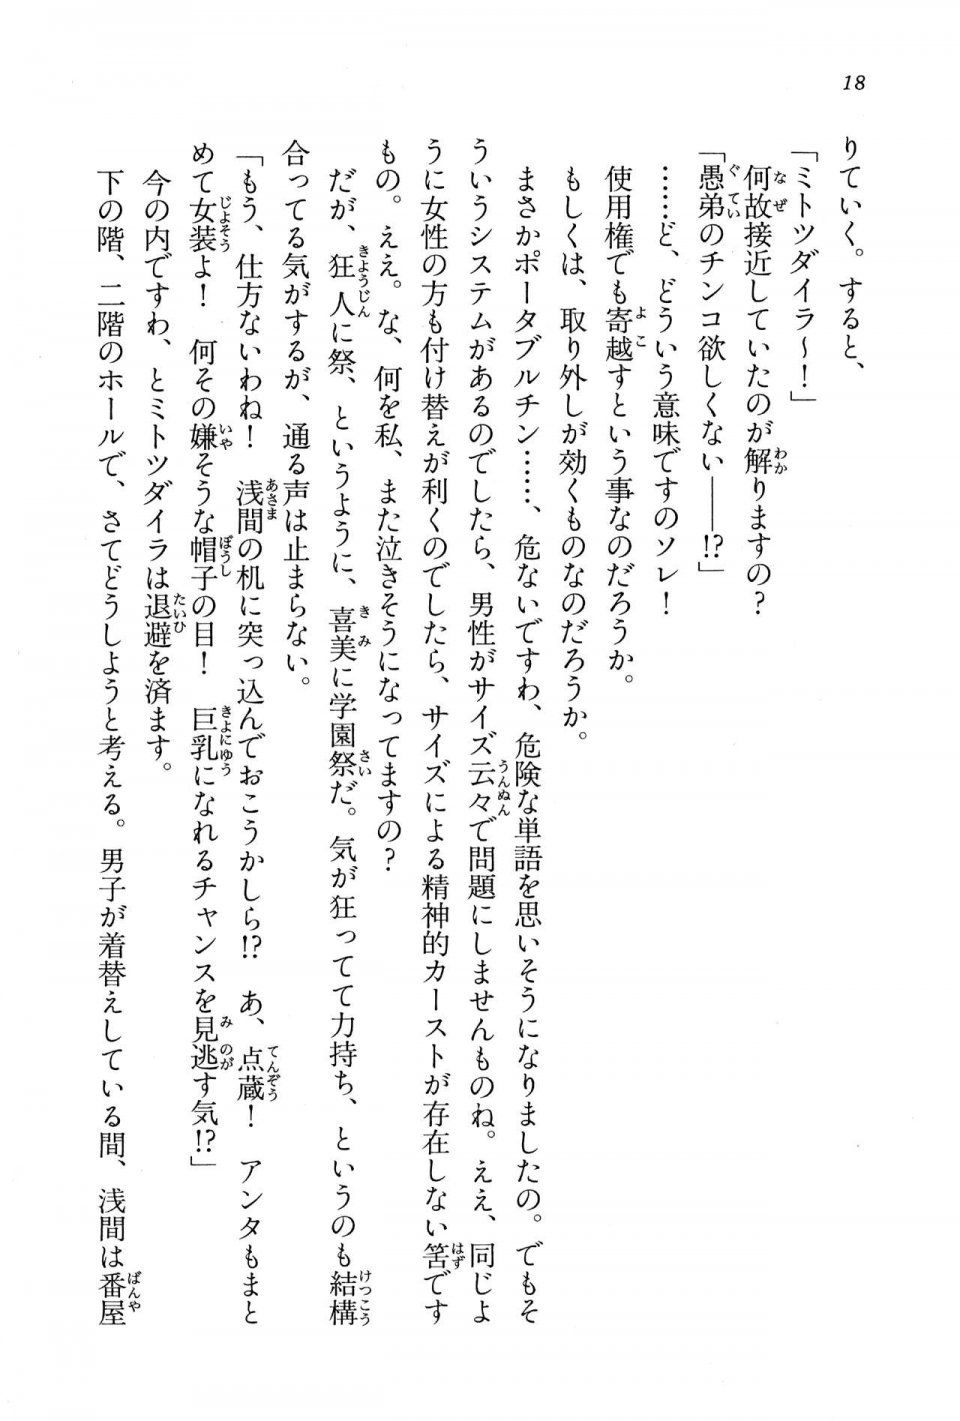 Kyoukai Senjou no Horizon BD Special Mininovel Vol 8(4B) - Photo #22